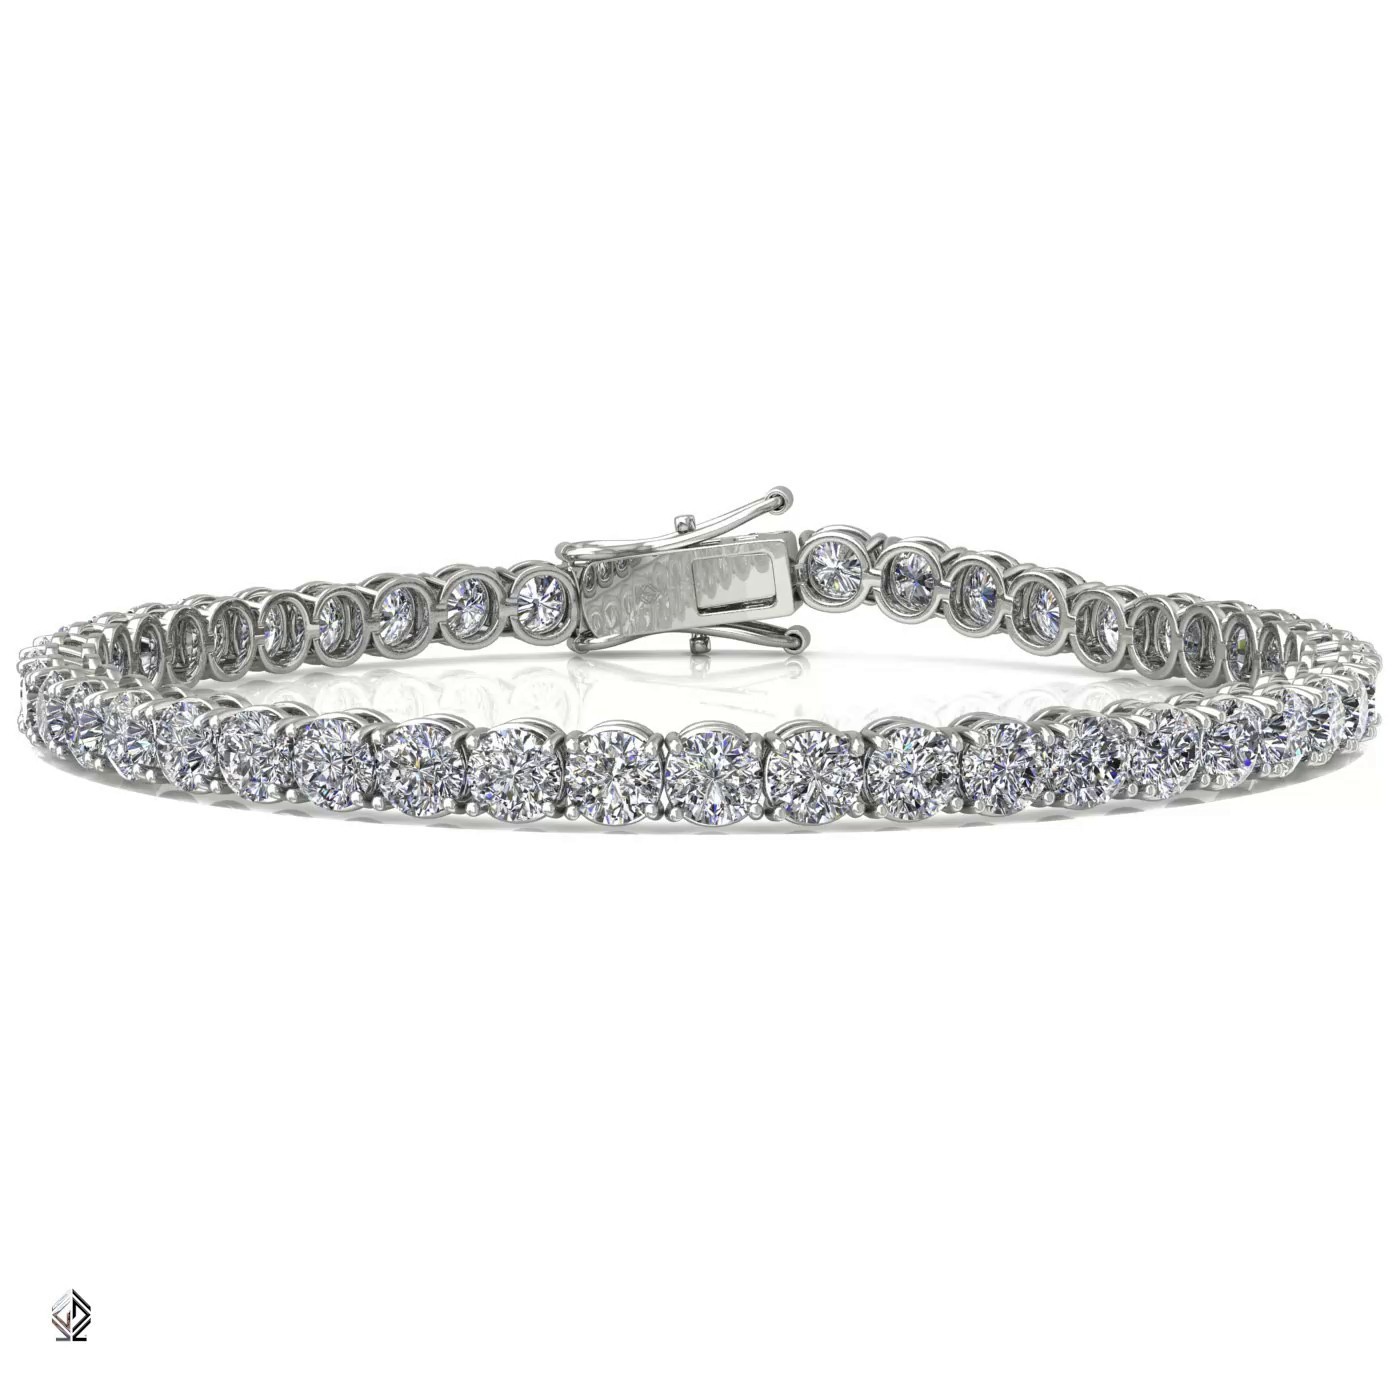 18k white gold 4.2mm 4 prong round shape diamond tennis bracelet in round setting Photos & images